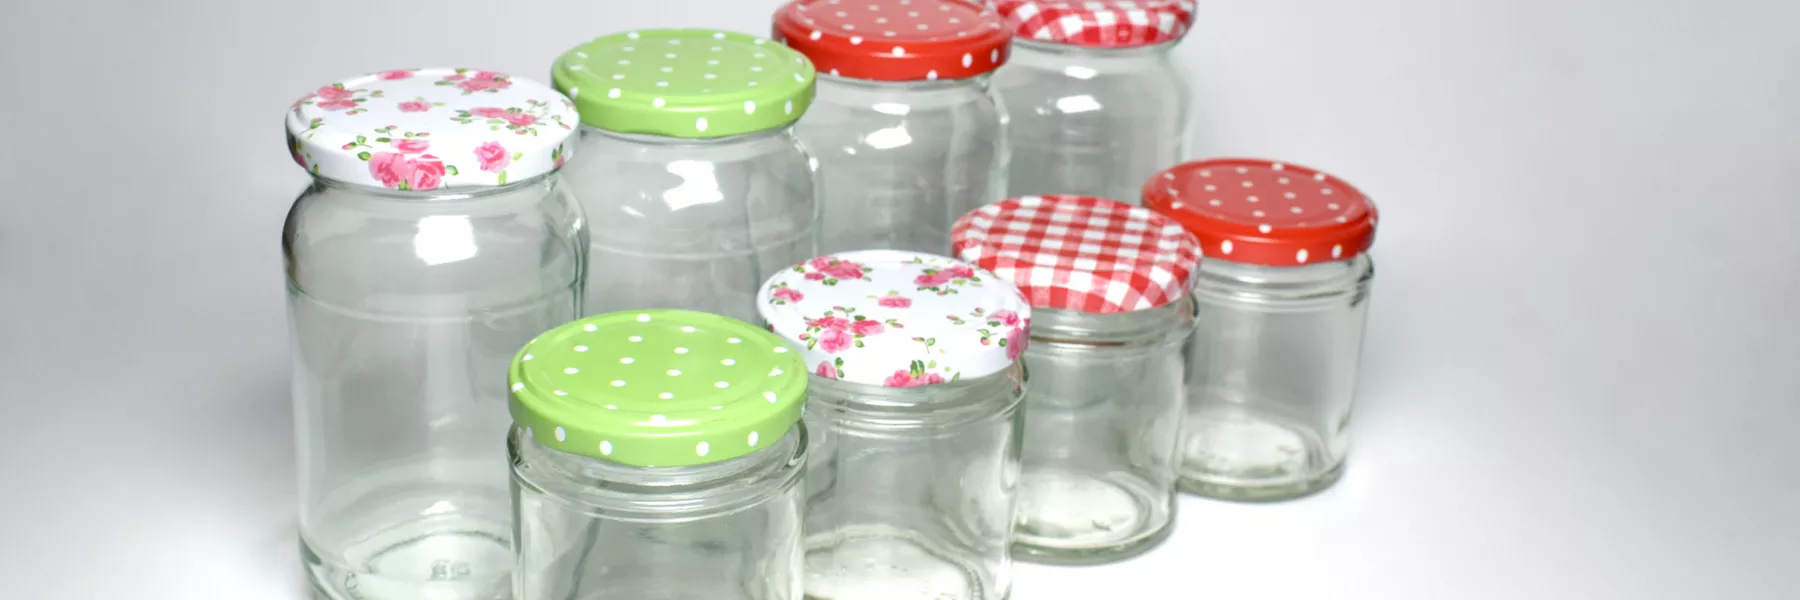 Glass Jars & Bottles from Love Jars